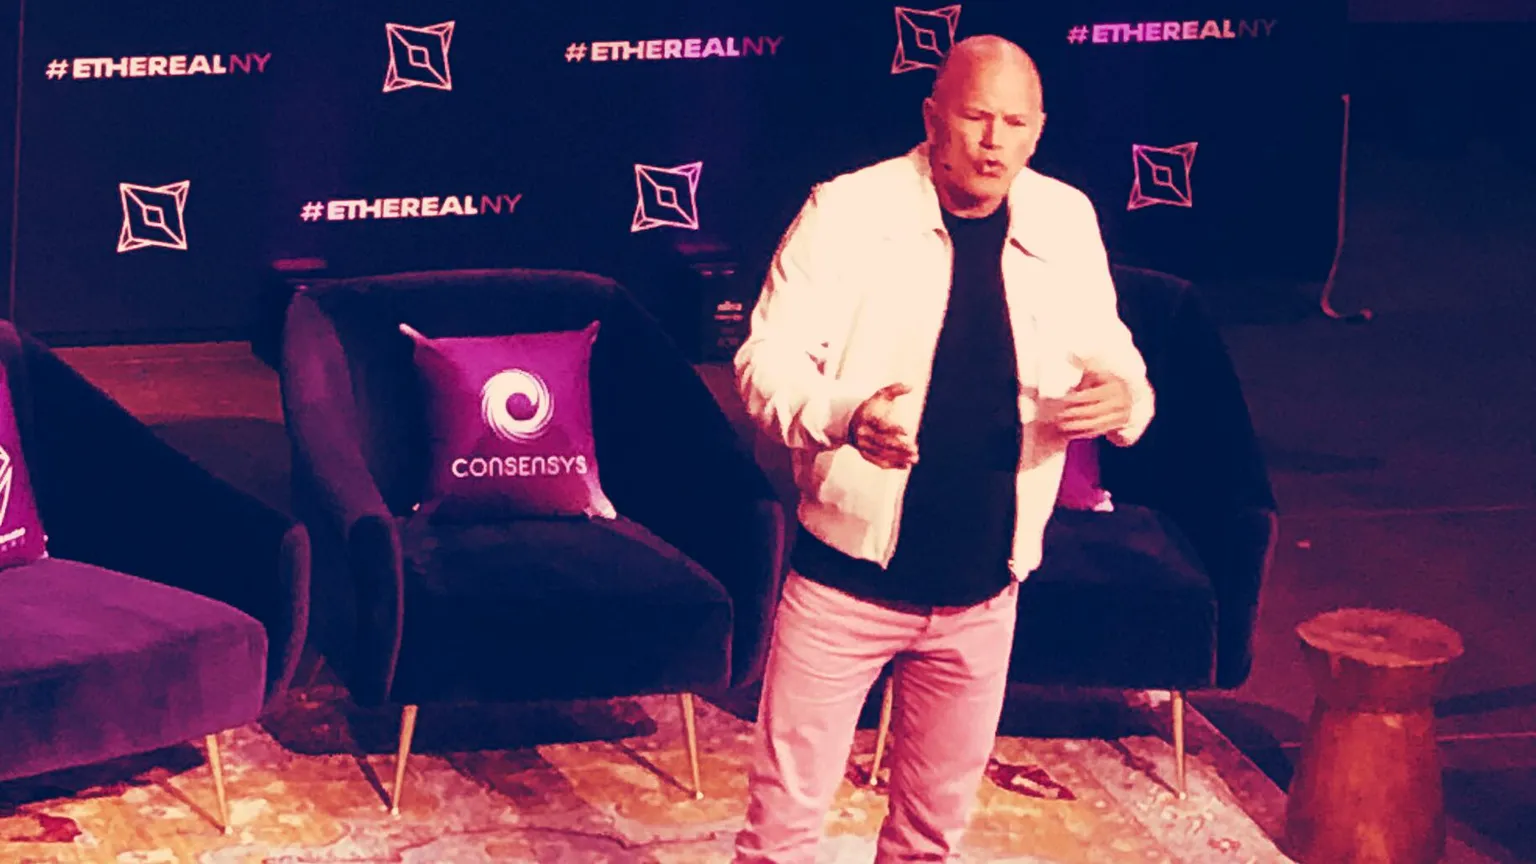 Mike Novogratz speaking at Ethereal in 2019. Image: Decrypt